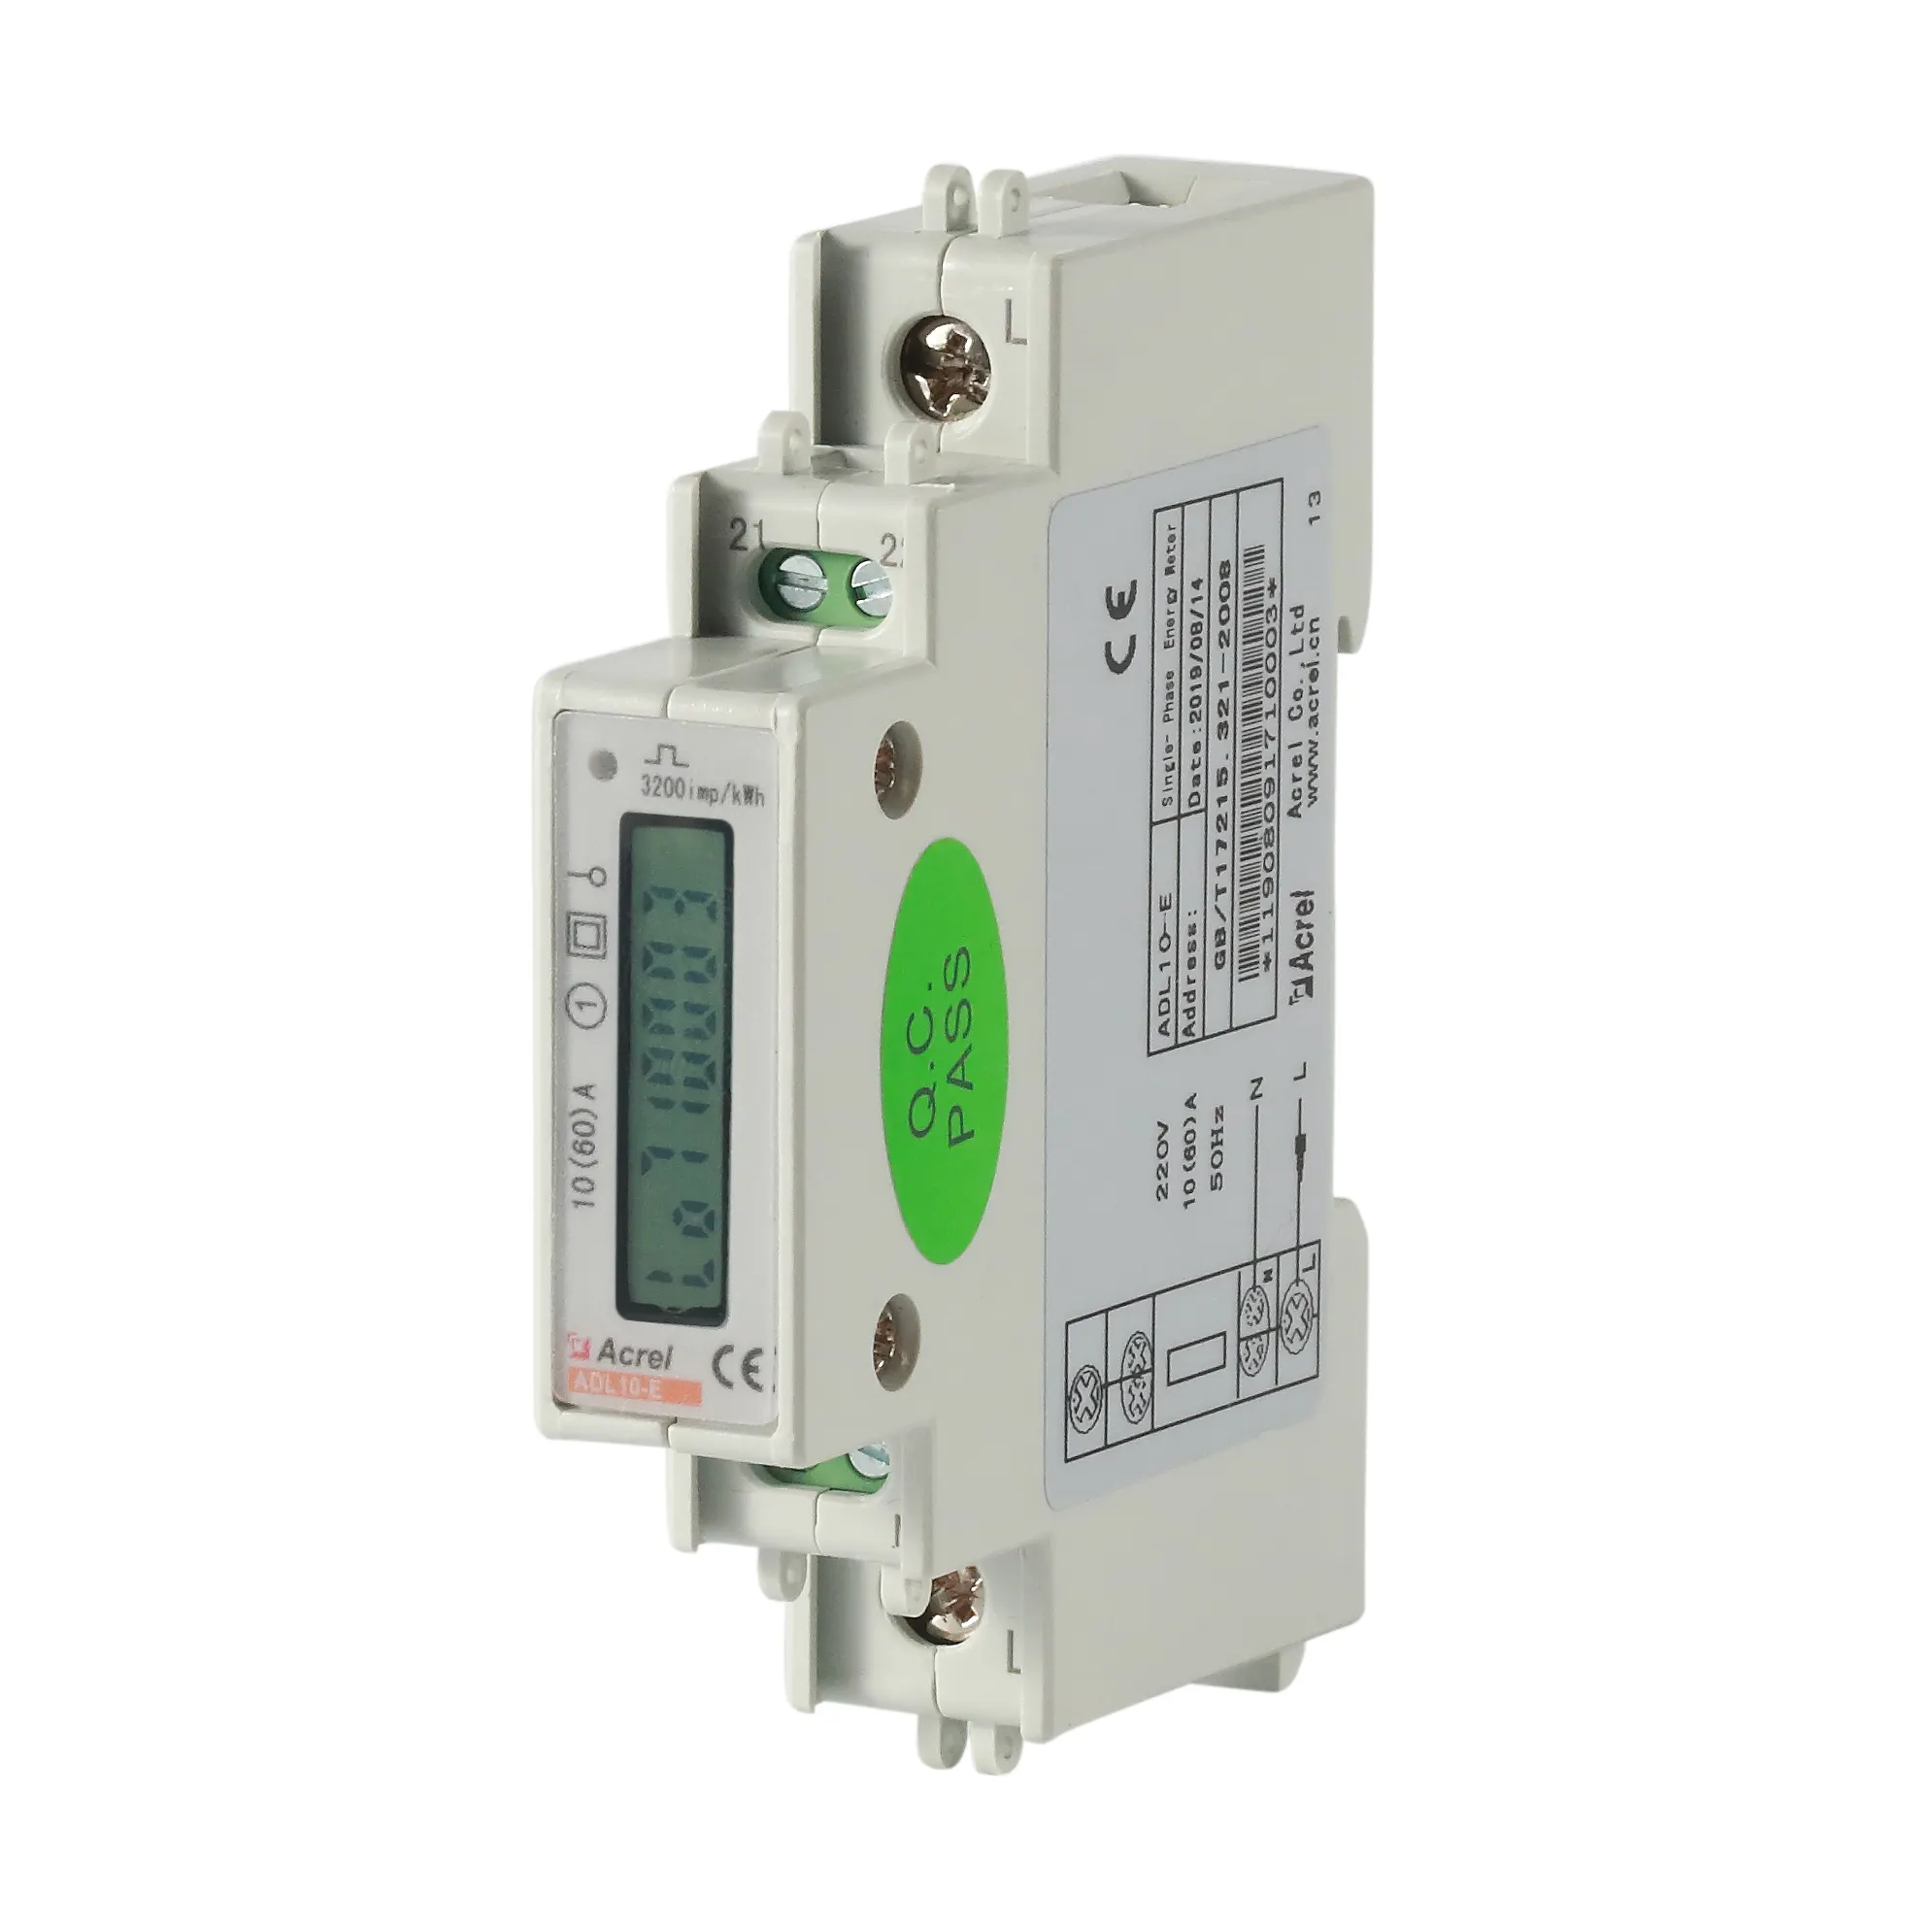 Acrel ADL10-E/C 1-Phasen-Energiezähler max 60 A Direktverbindung RS485 Kommunikation